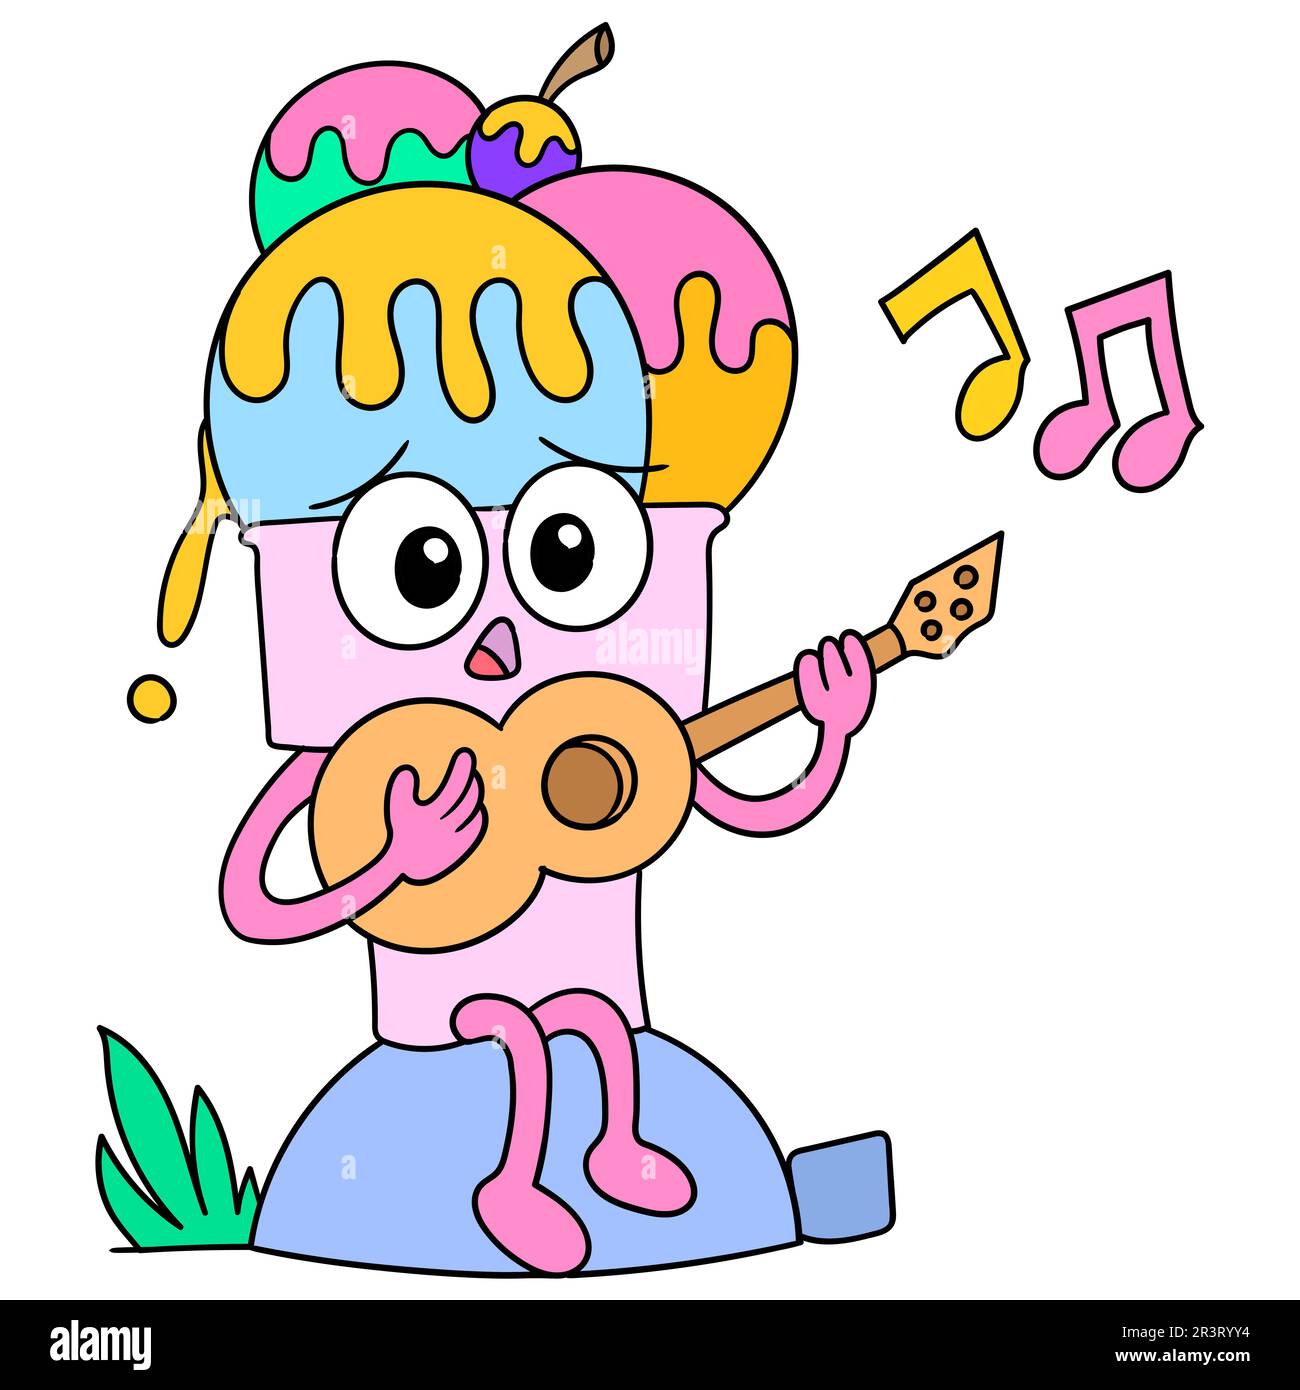 Ice cream cartoon playing music on guitar, doodle icon image Stock Photo